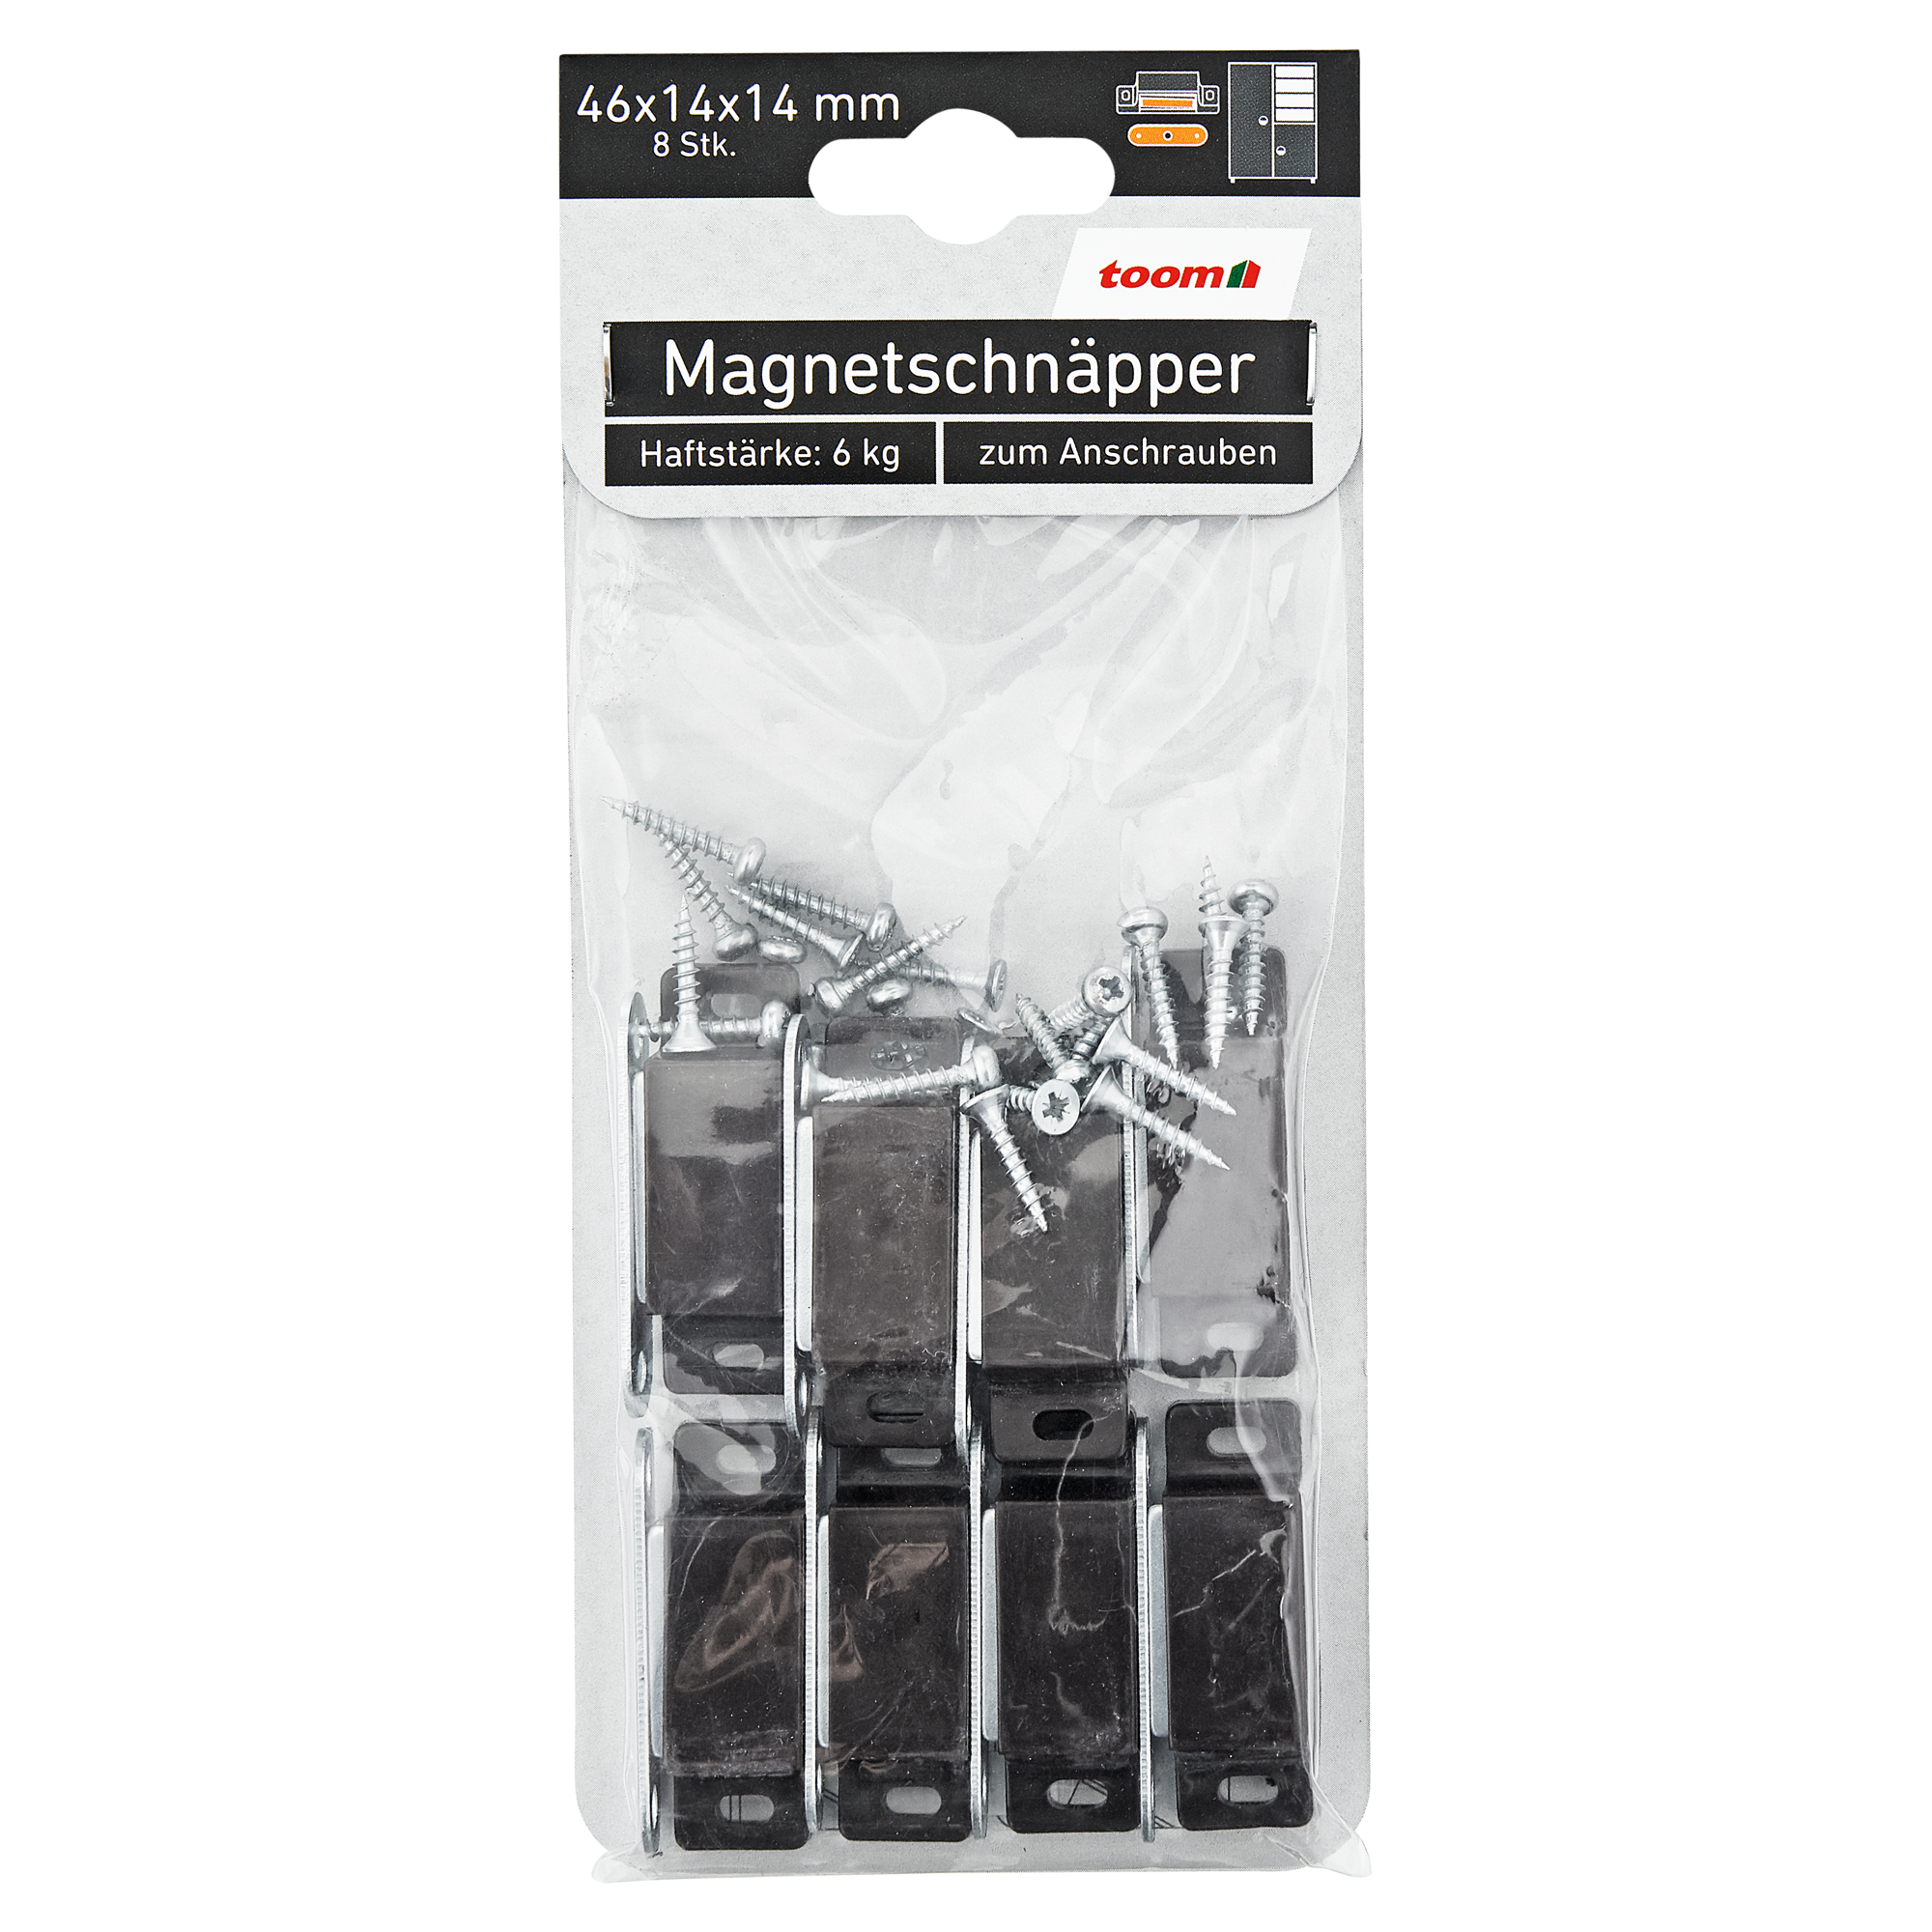 Magnetschnäpper Kunststoff braun 46 x 14 x 14 mm 8 Stück + product picture